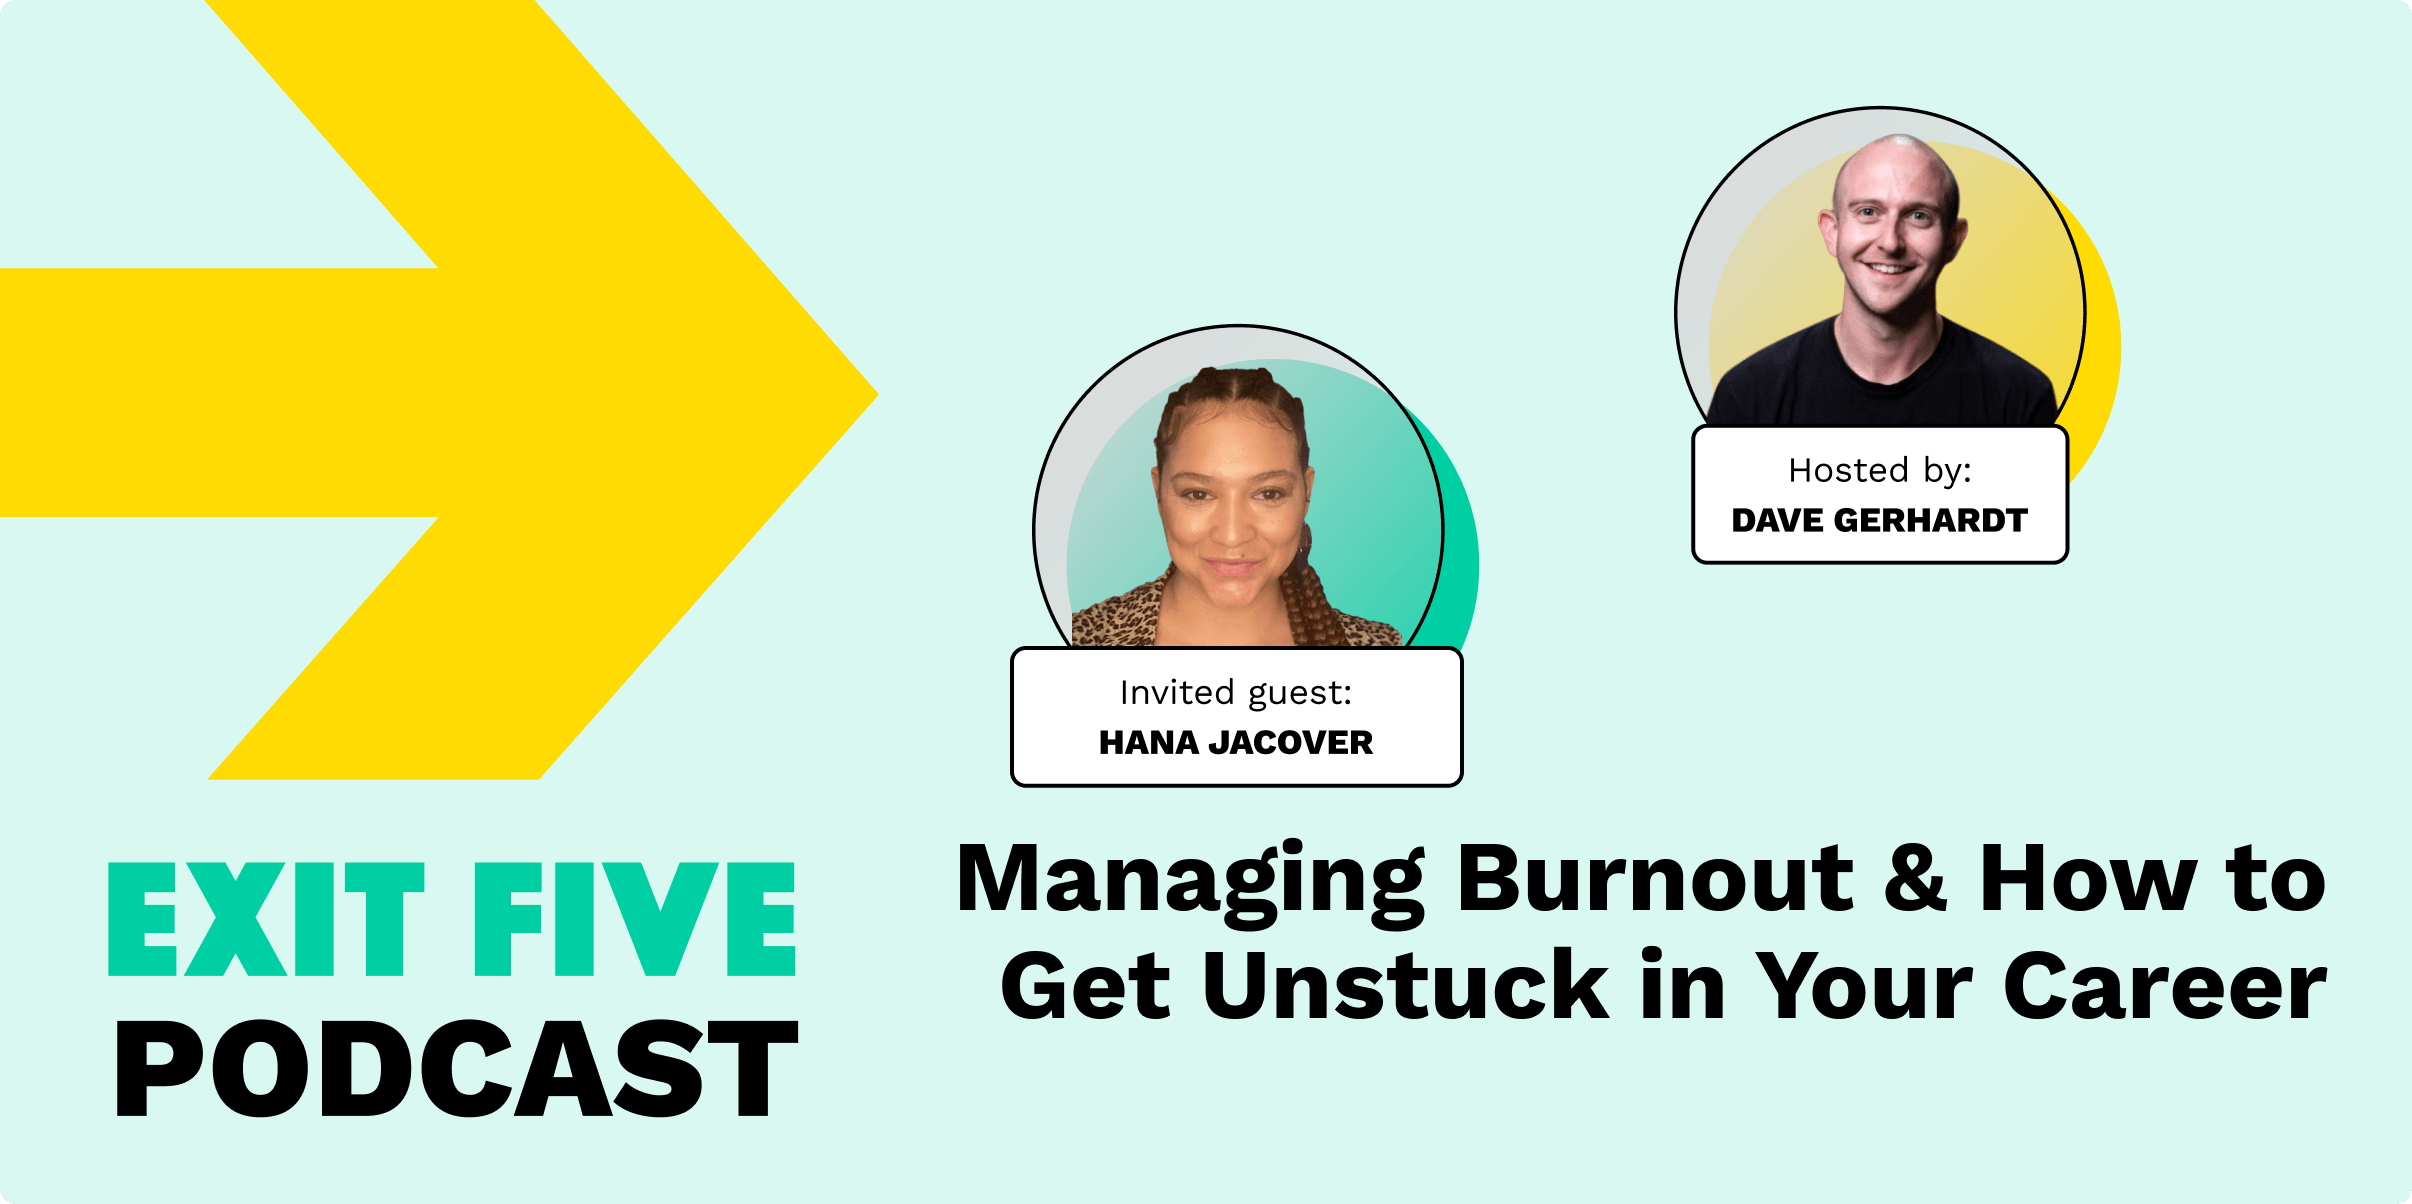 Managing Burnout & How to Get Unstuck in Your Career